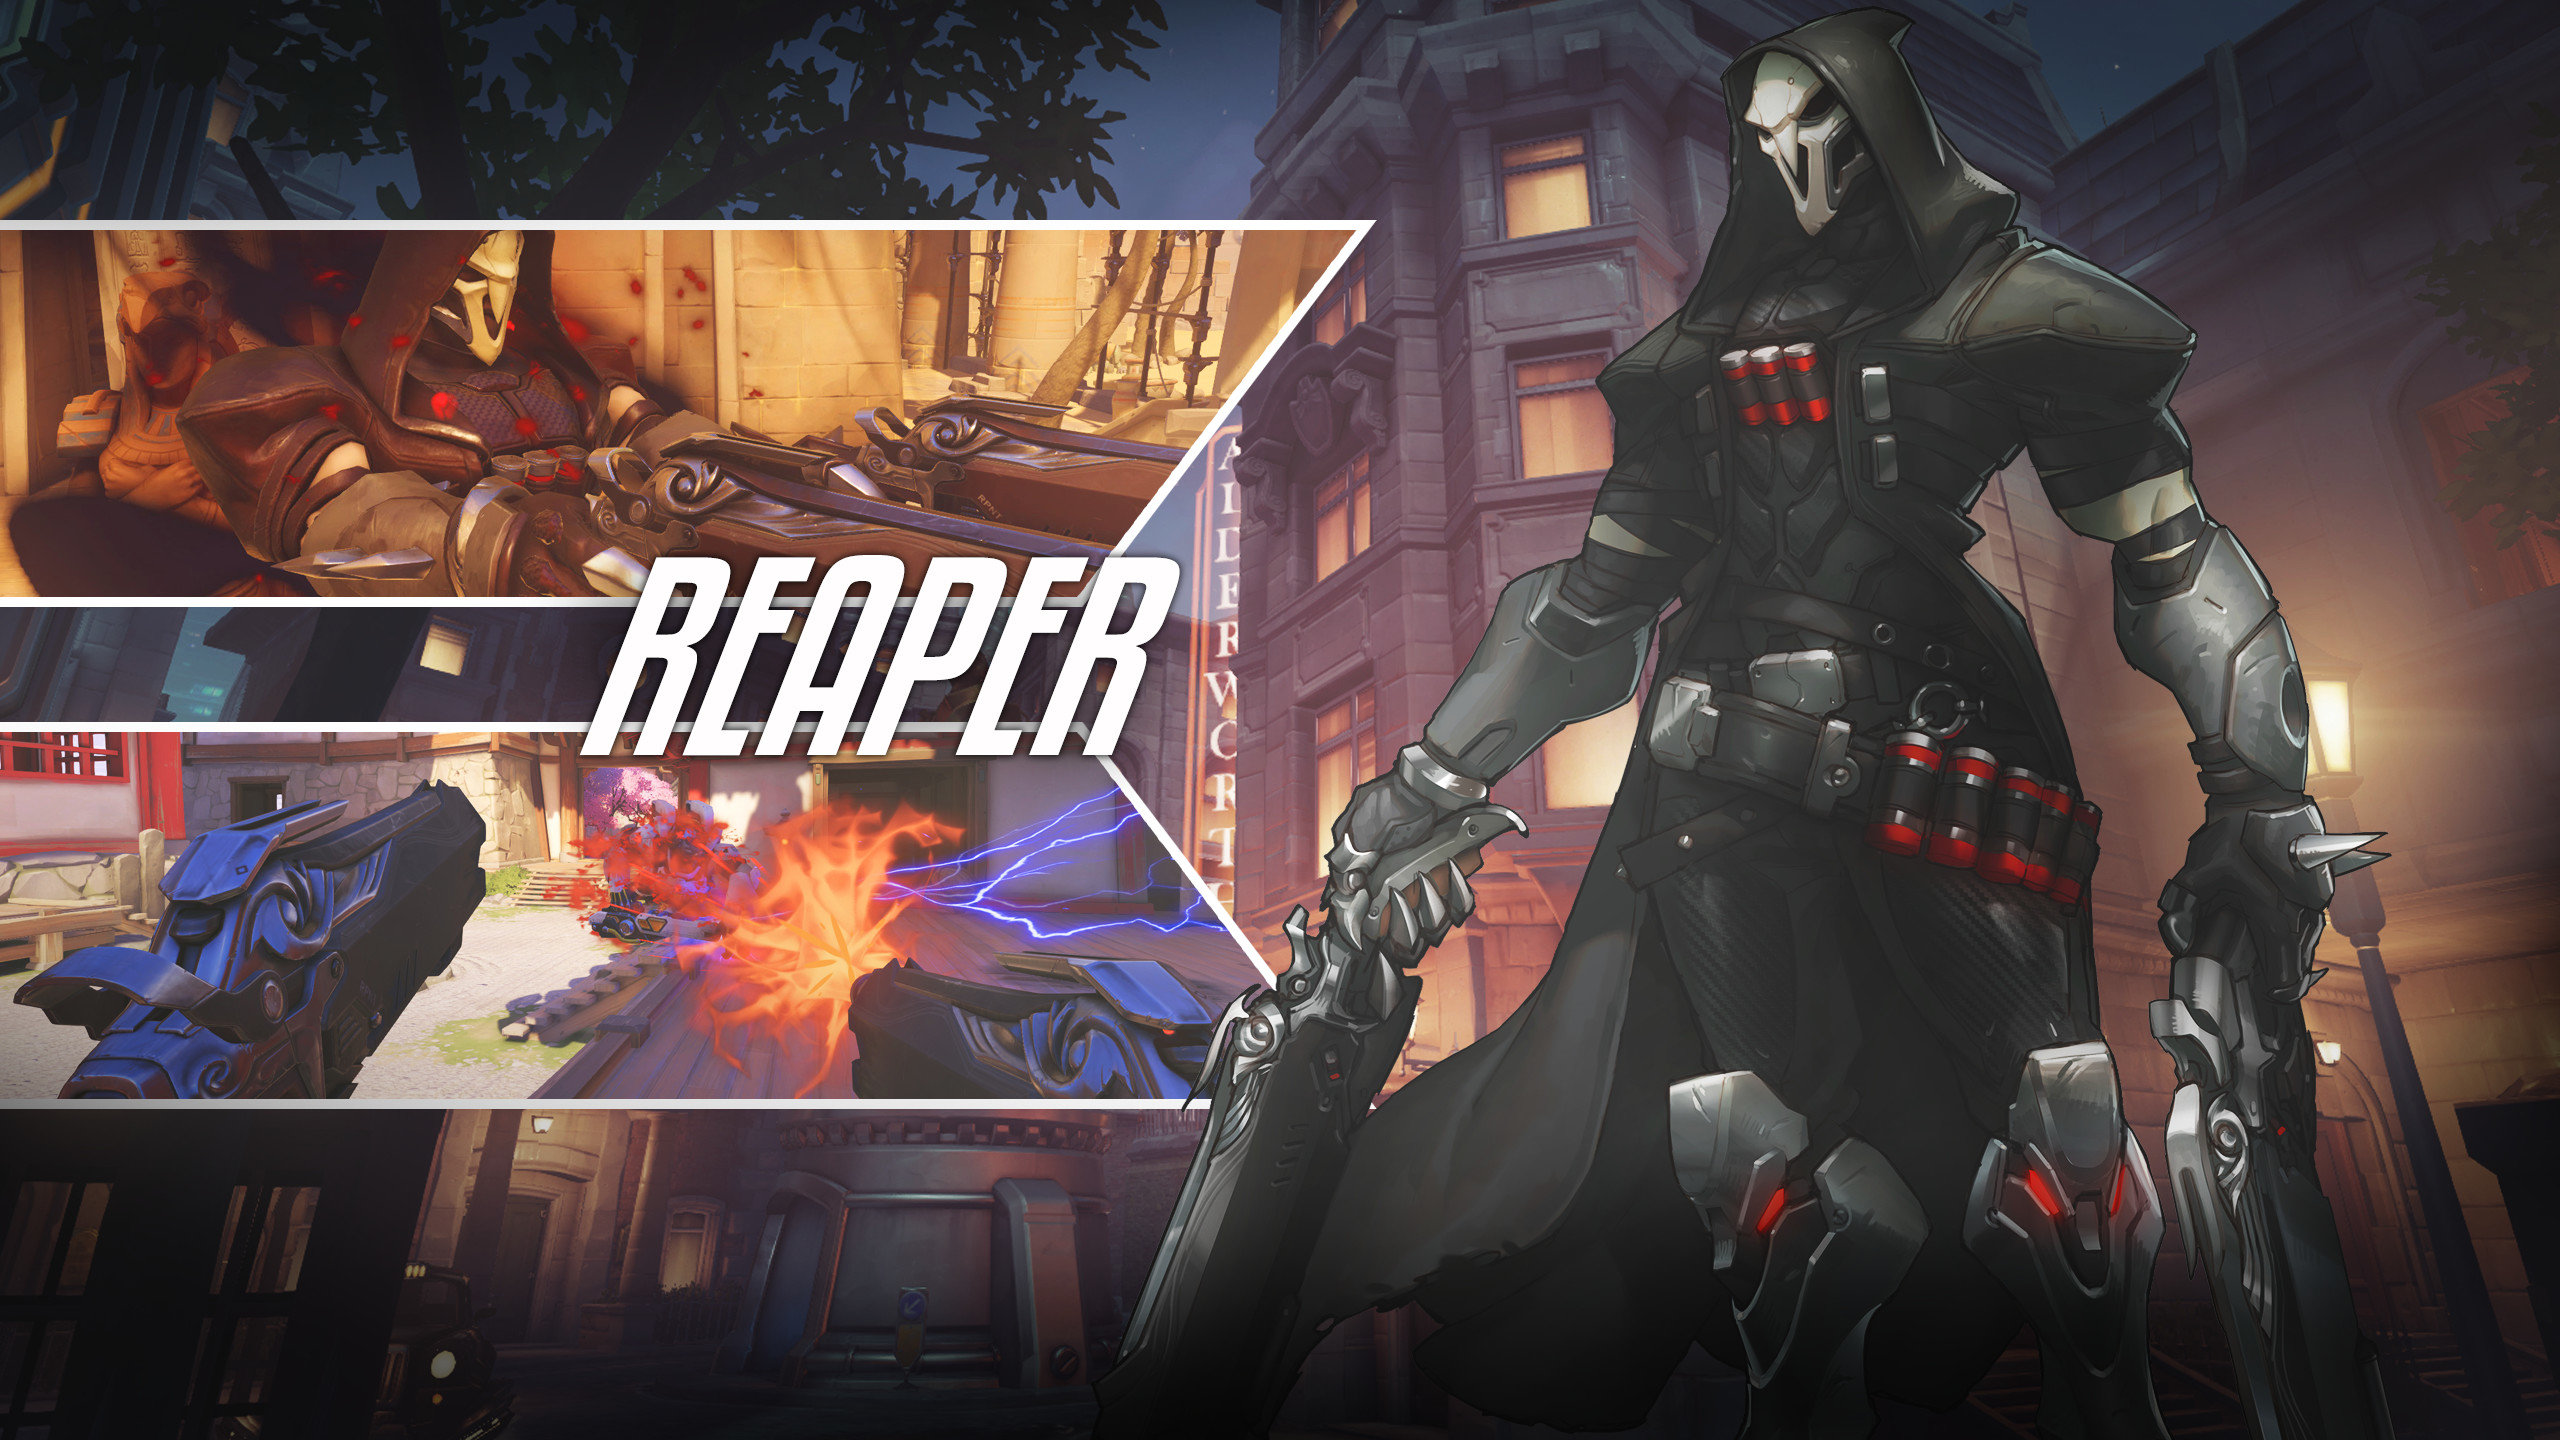 Best Reaper (Overwatch) wallpaper ID:169866 for High Resolution hd 2560x1440 desktop